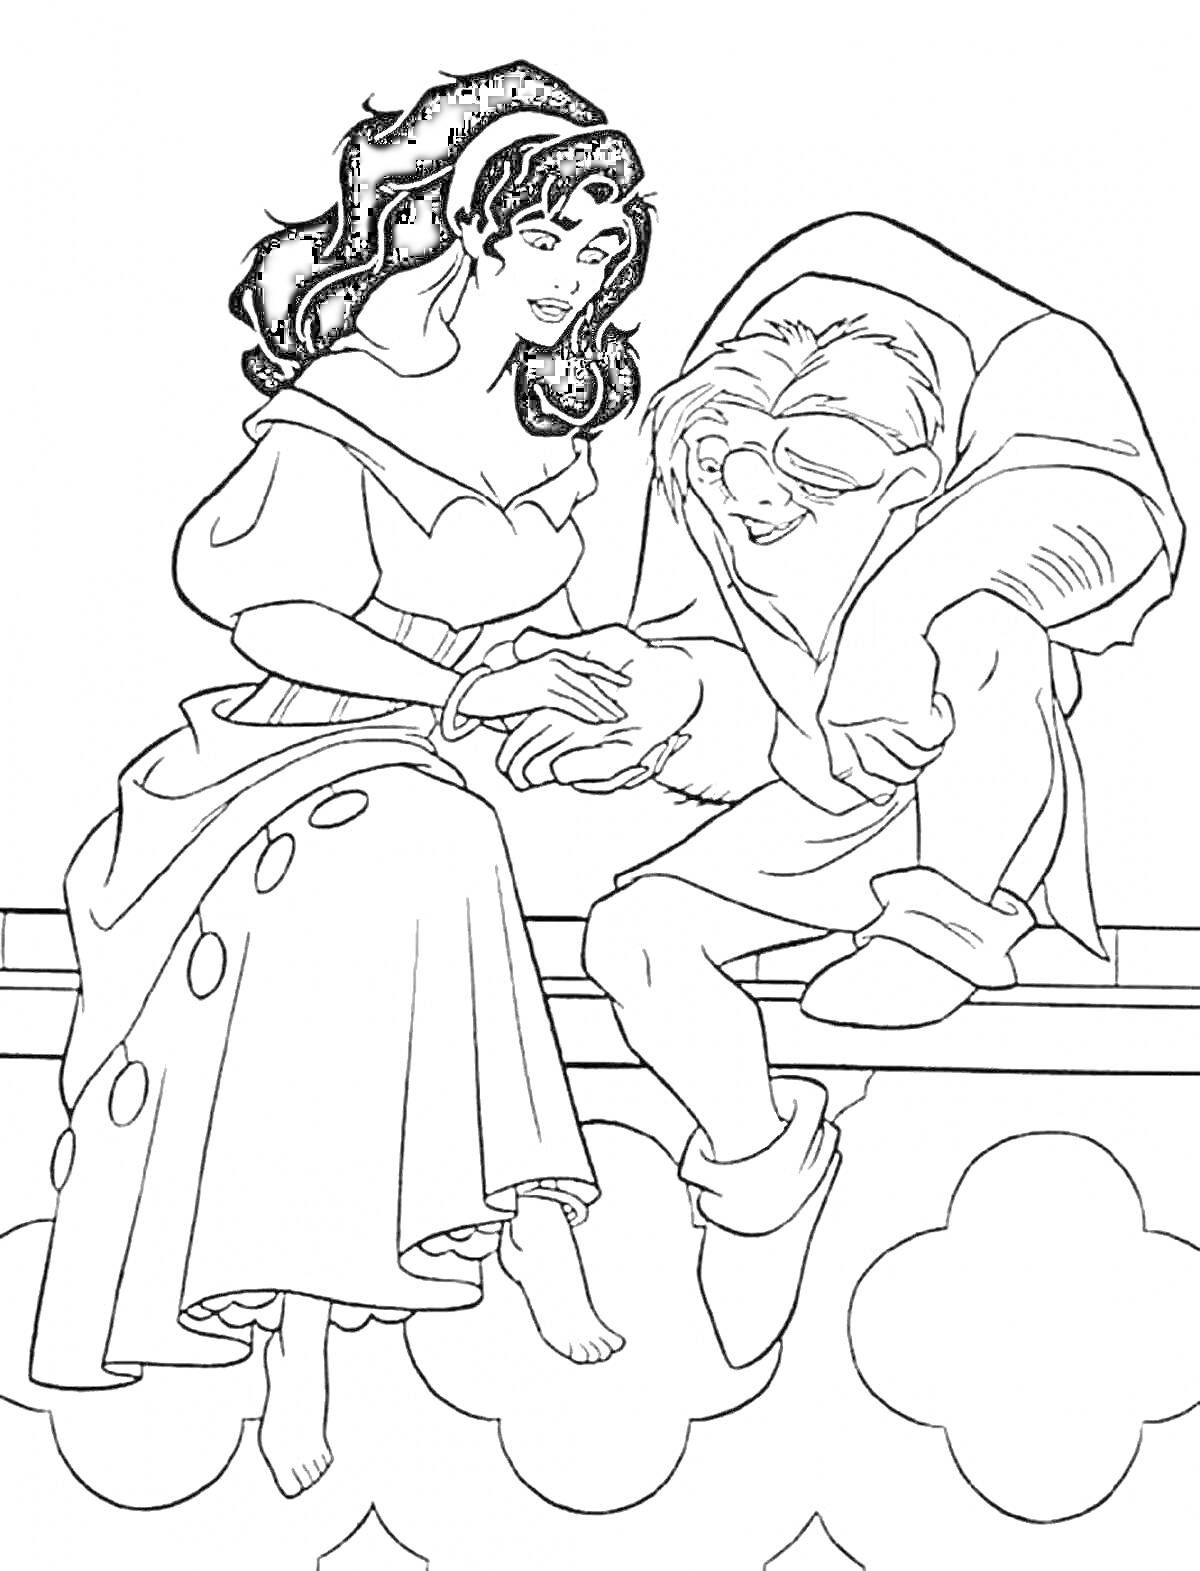 Раскраска Эсмеральда и Квазимодо сидят на парапете